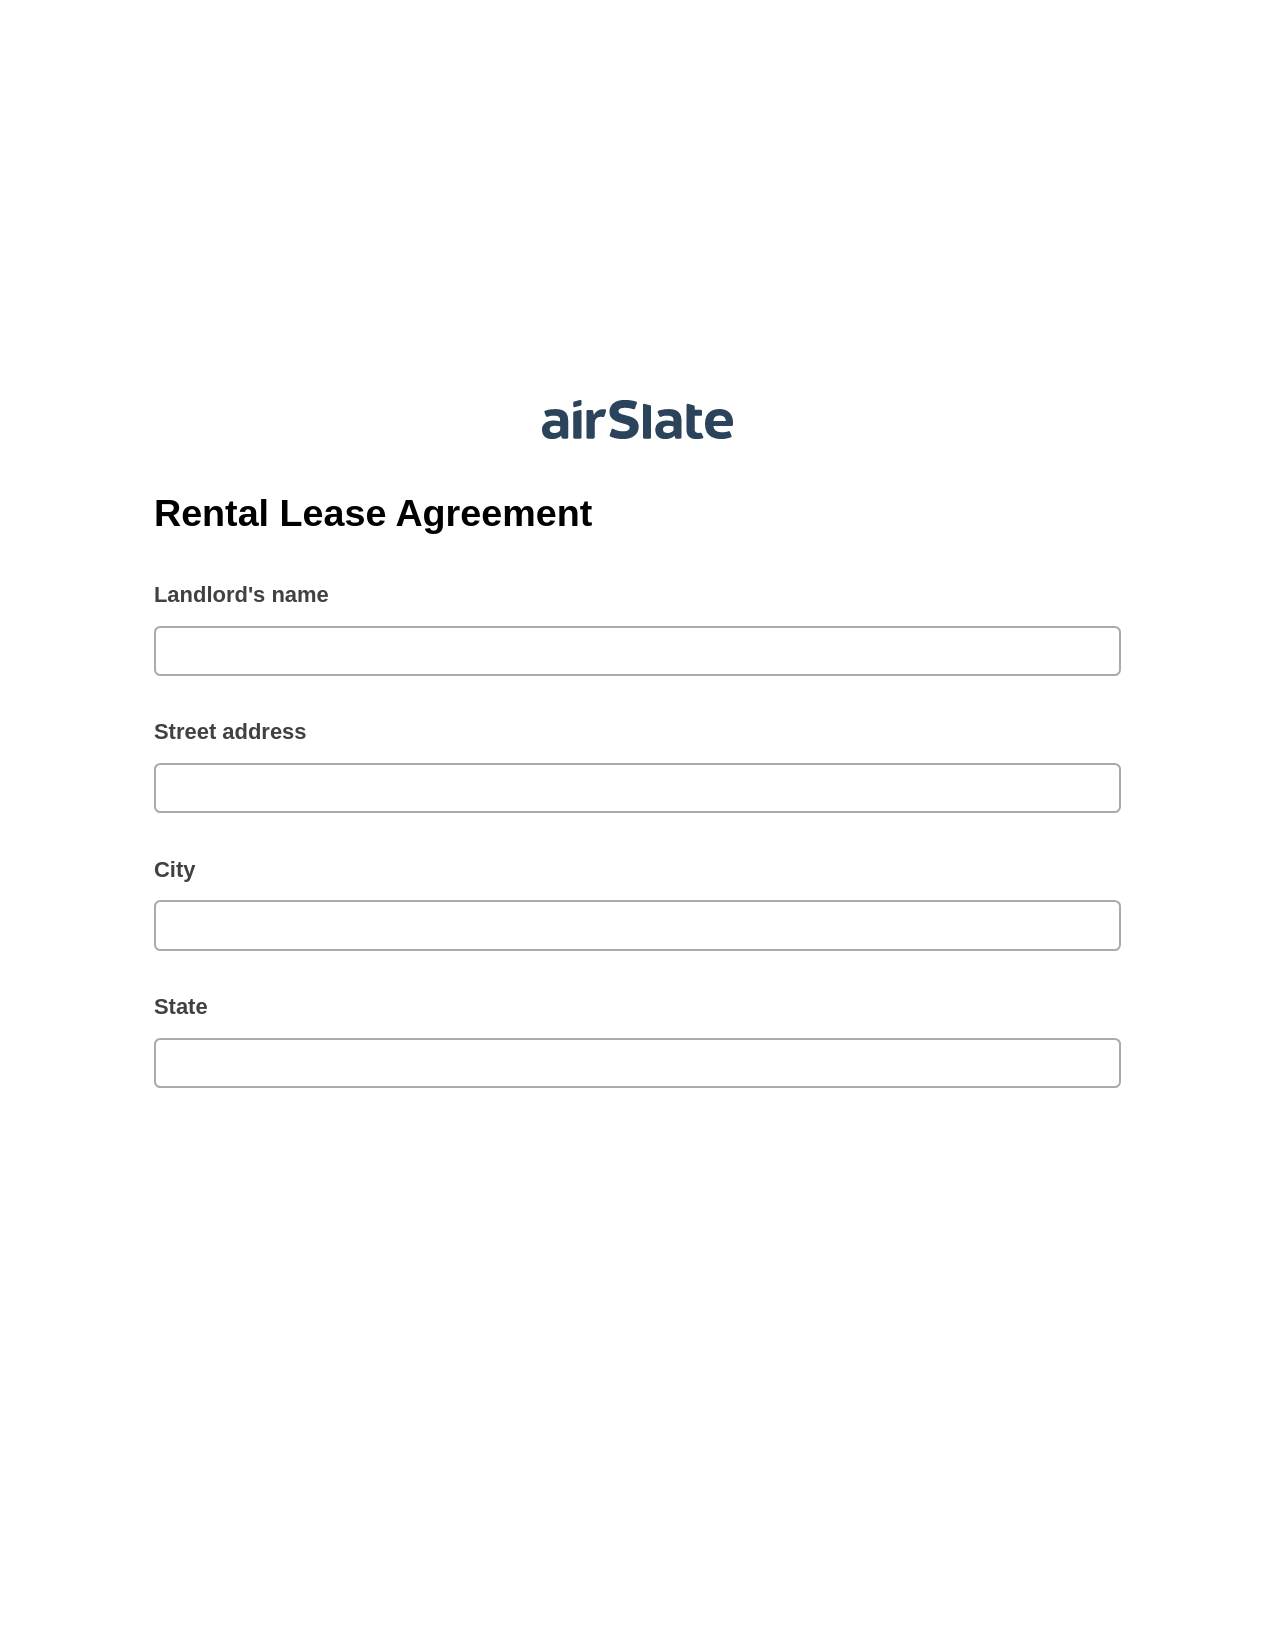 Multirole Rental Lease Agreement Pre-fill from Google Sheet Dropdown Options Bot, Create Slate every Google Sheet Update Bot, Post-finish Document Bot